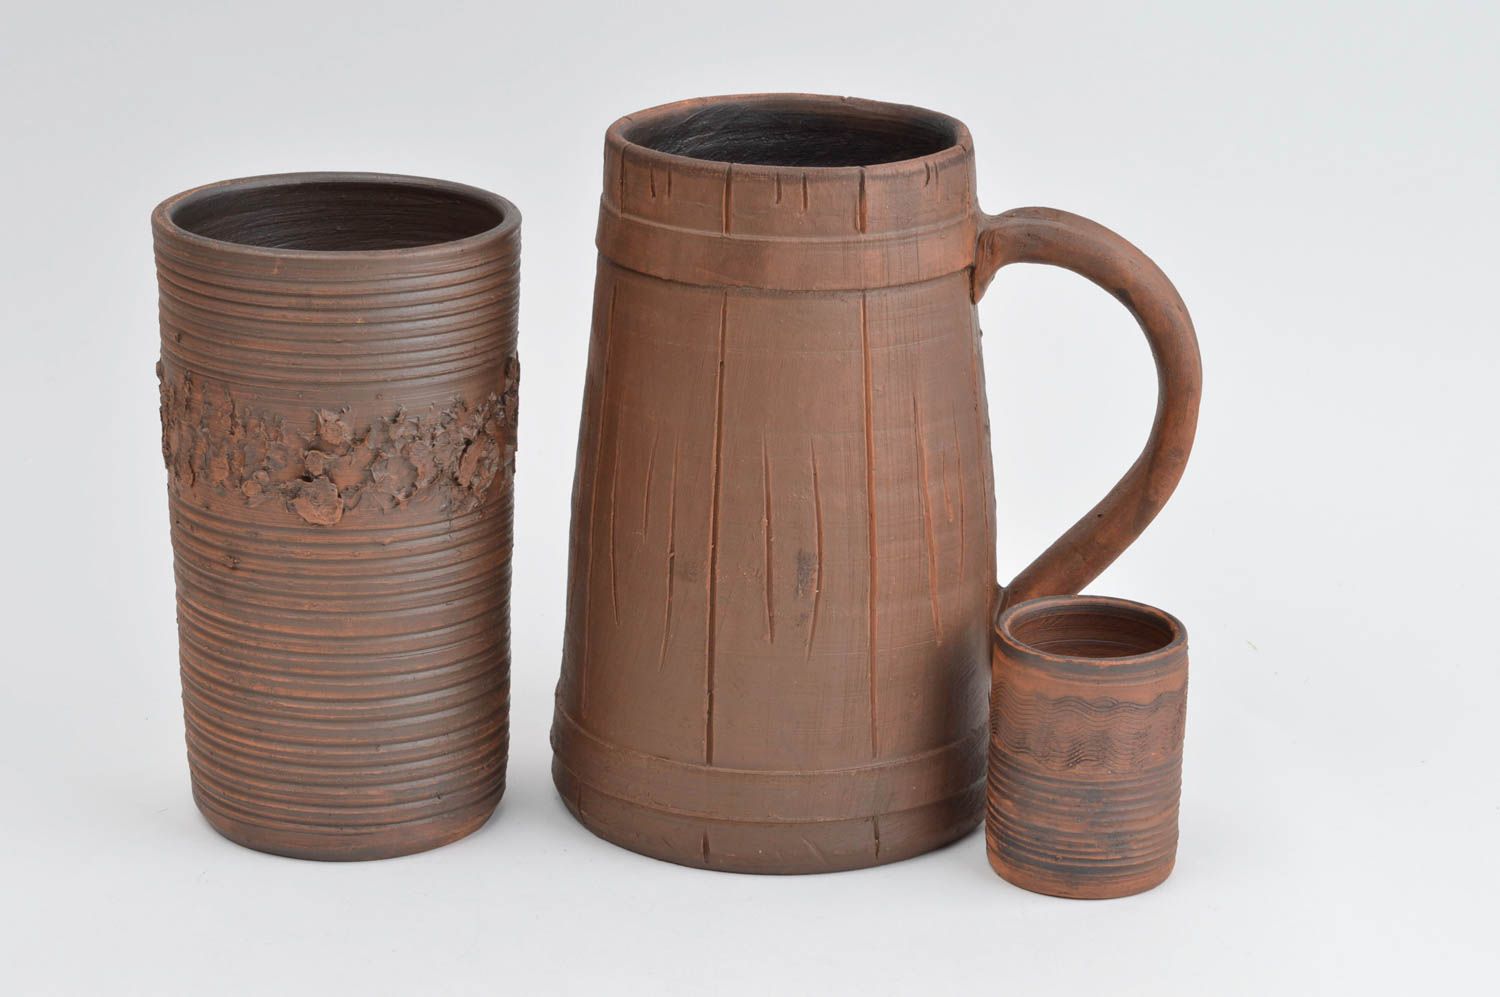 Ceramic tableware designer kitchenware eco-friendly dishes beer mug gift ideas photo 2